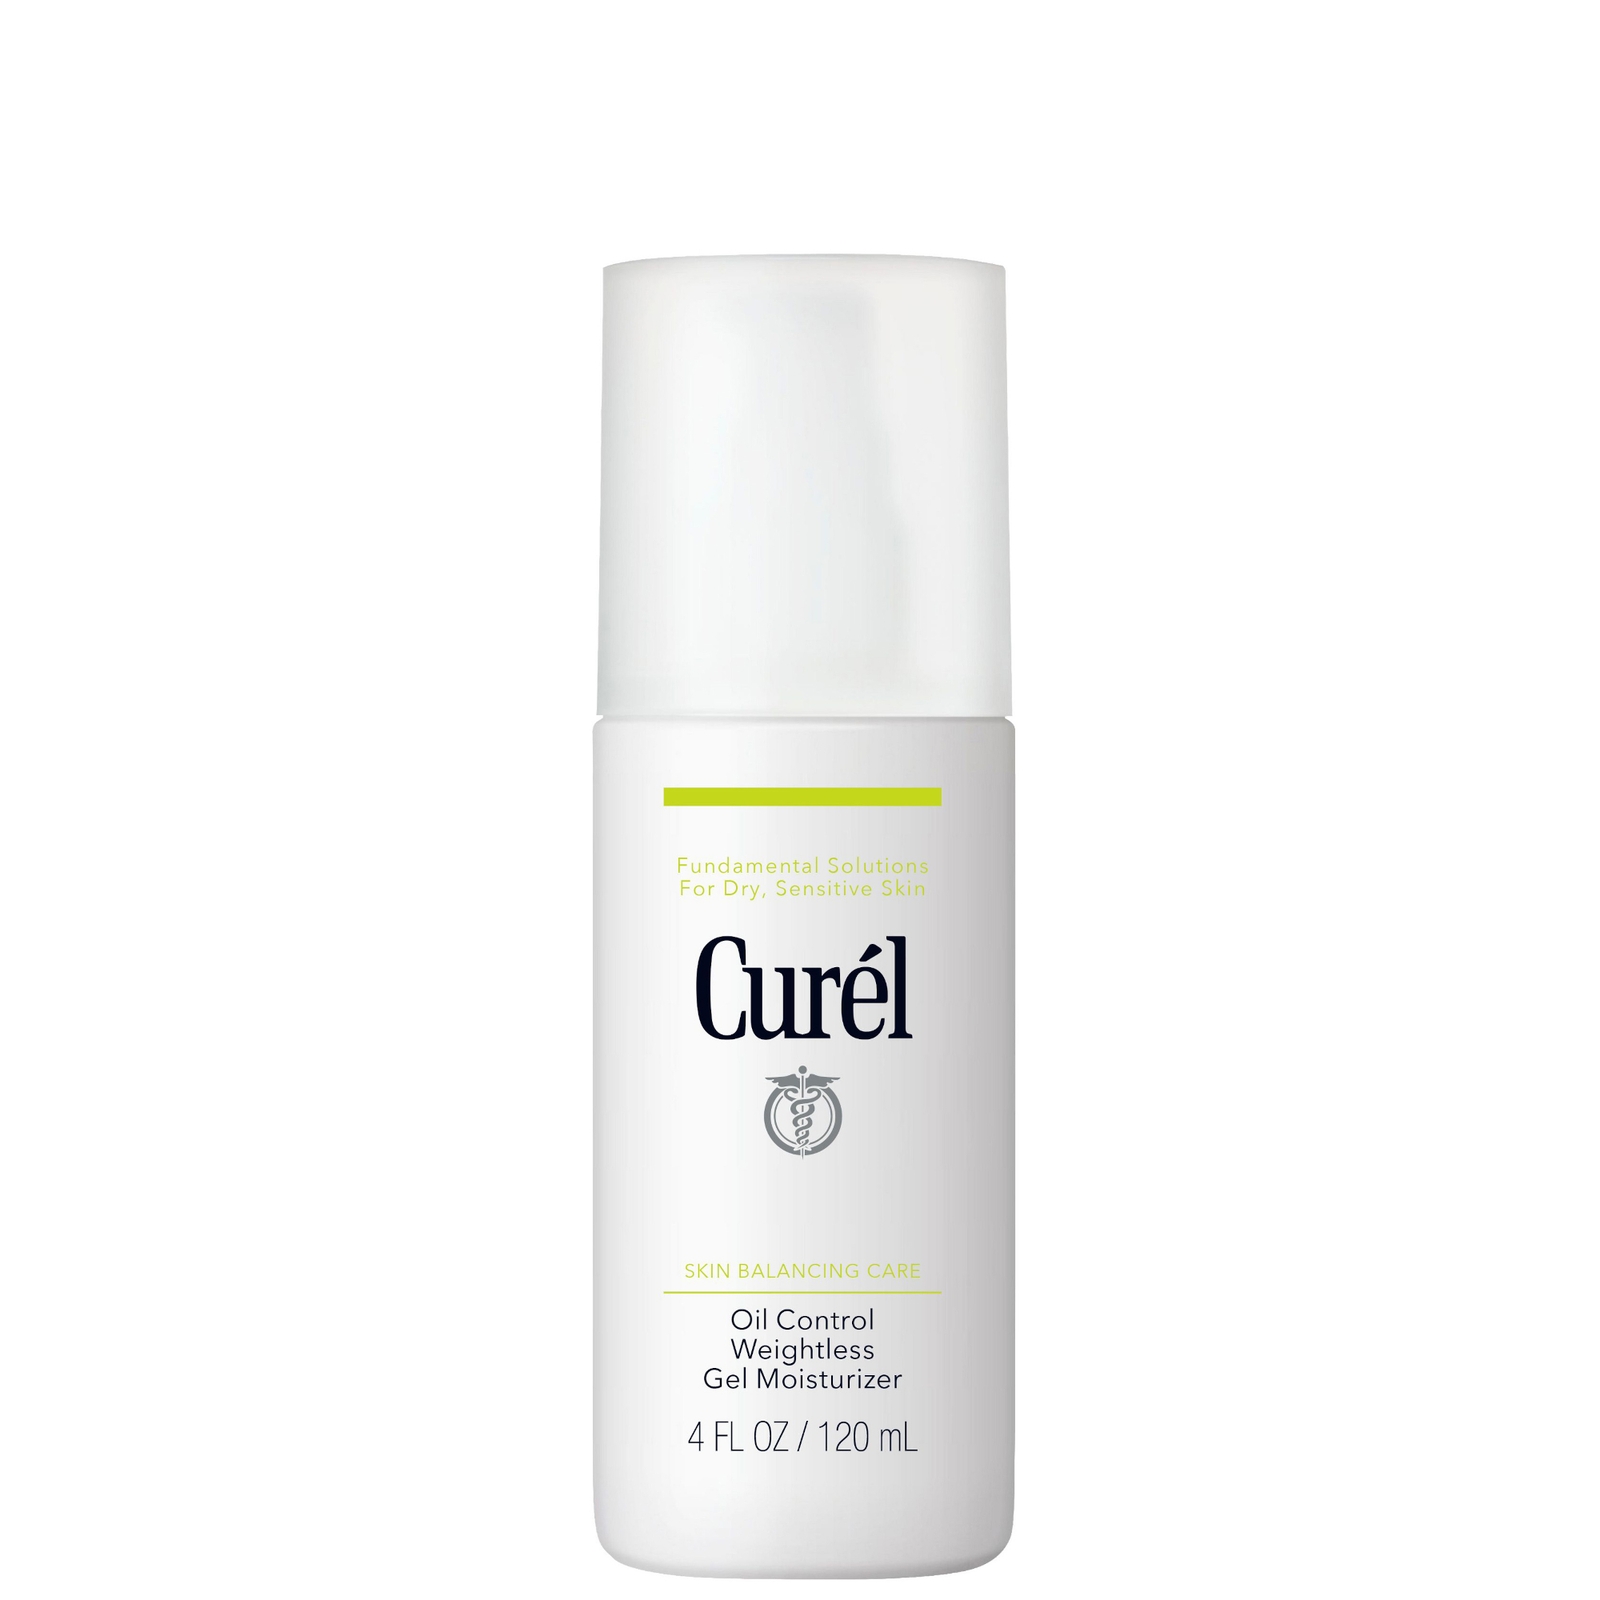 Curel Skin Balancing Care Oil Control Weightless Moisturising Gel for Sensitive Skin 120ml